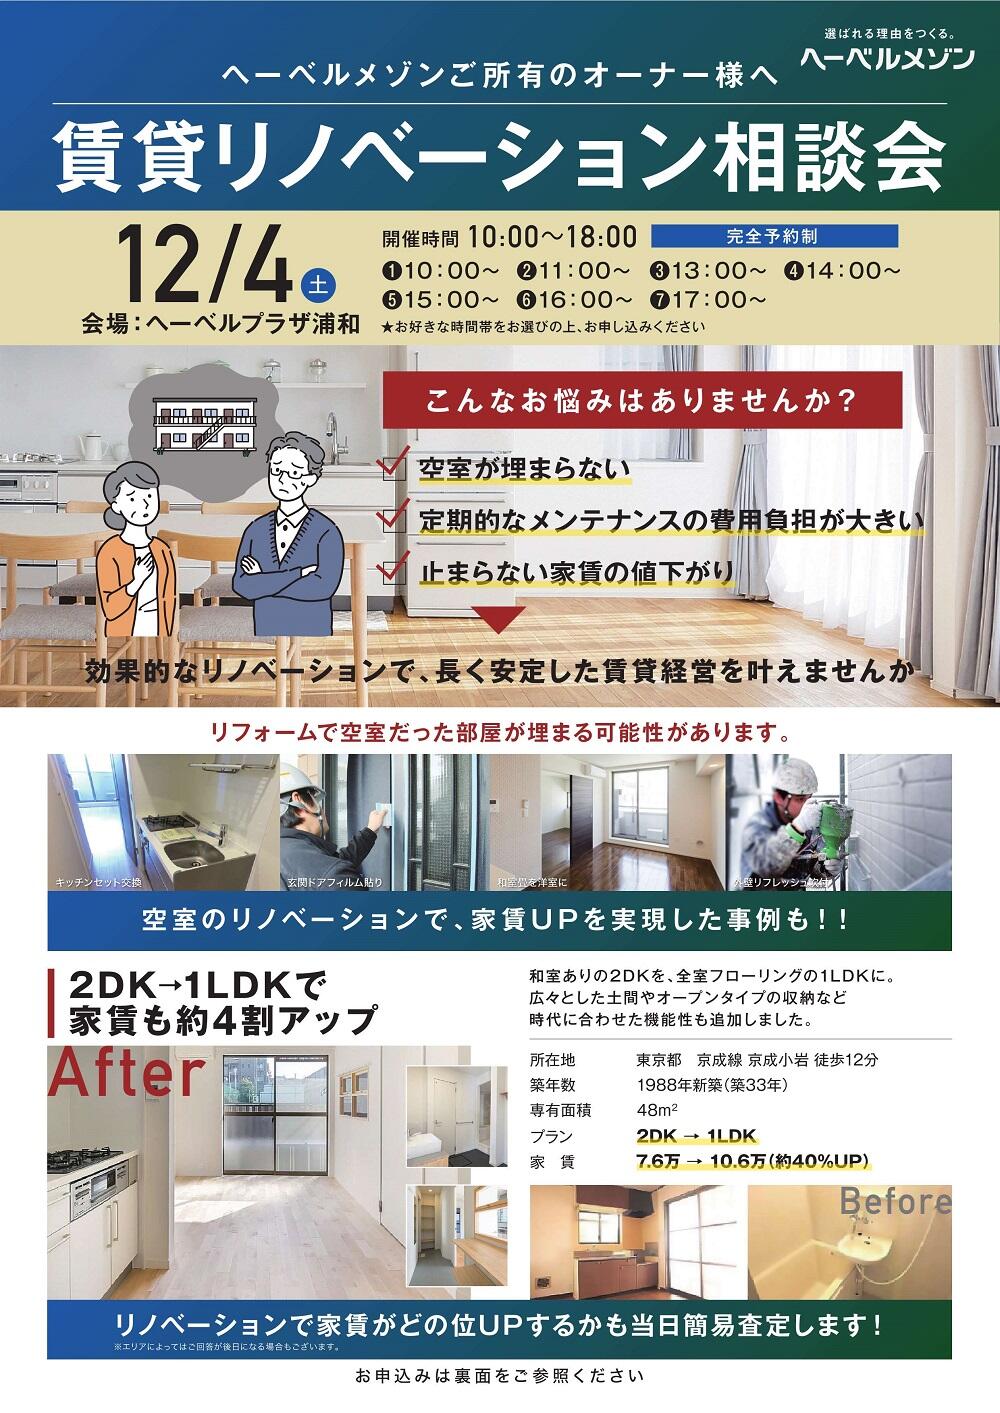 https://www.asahi-kasei.co.jp/maison/hebelplaza/blog/18/urawa/item/2021/211118-1.jpg